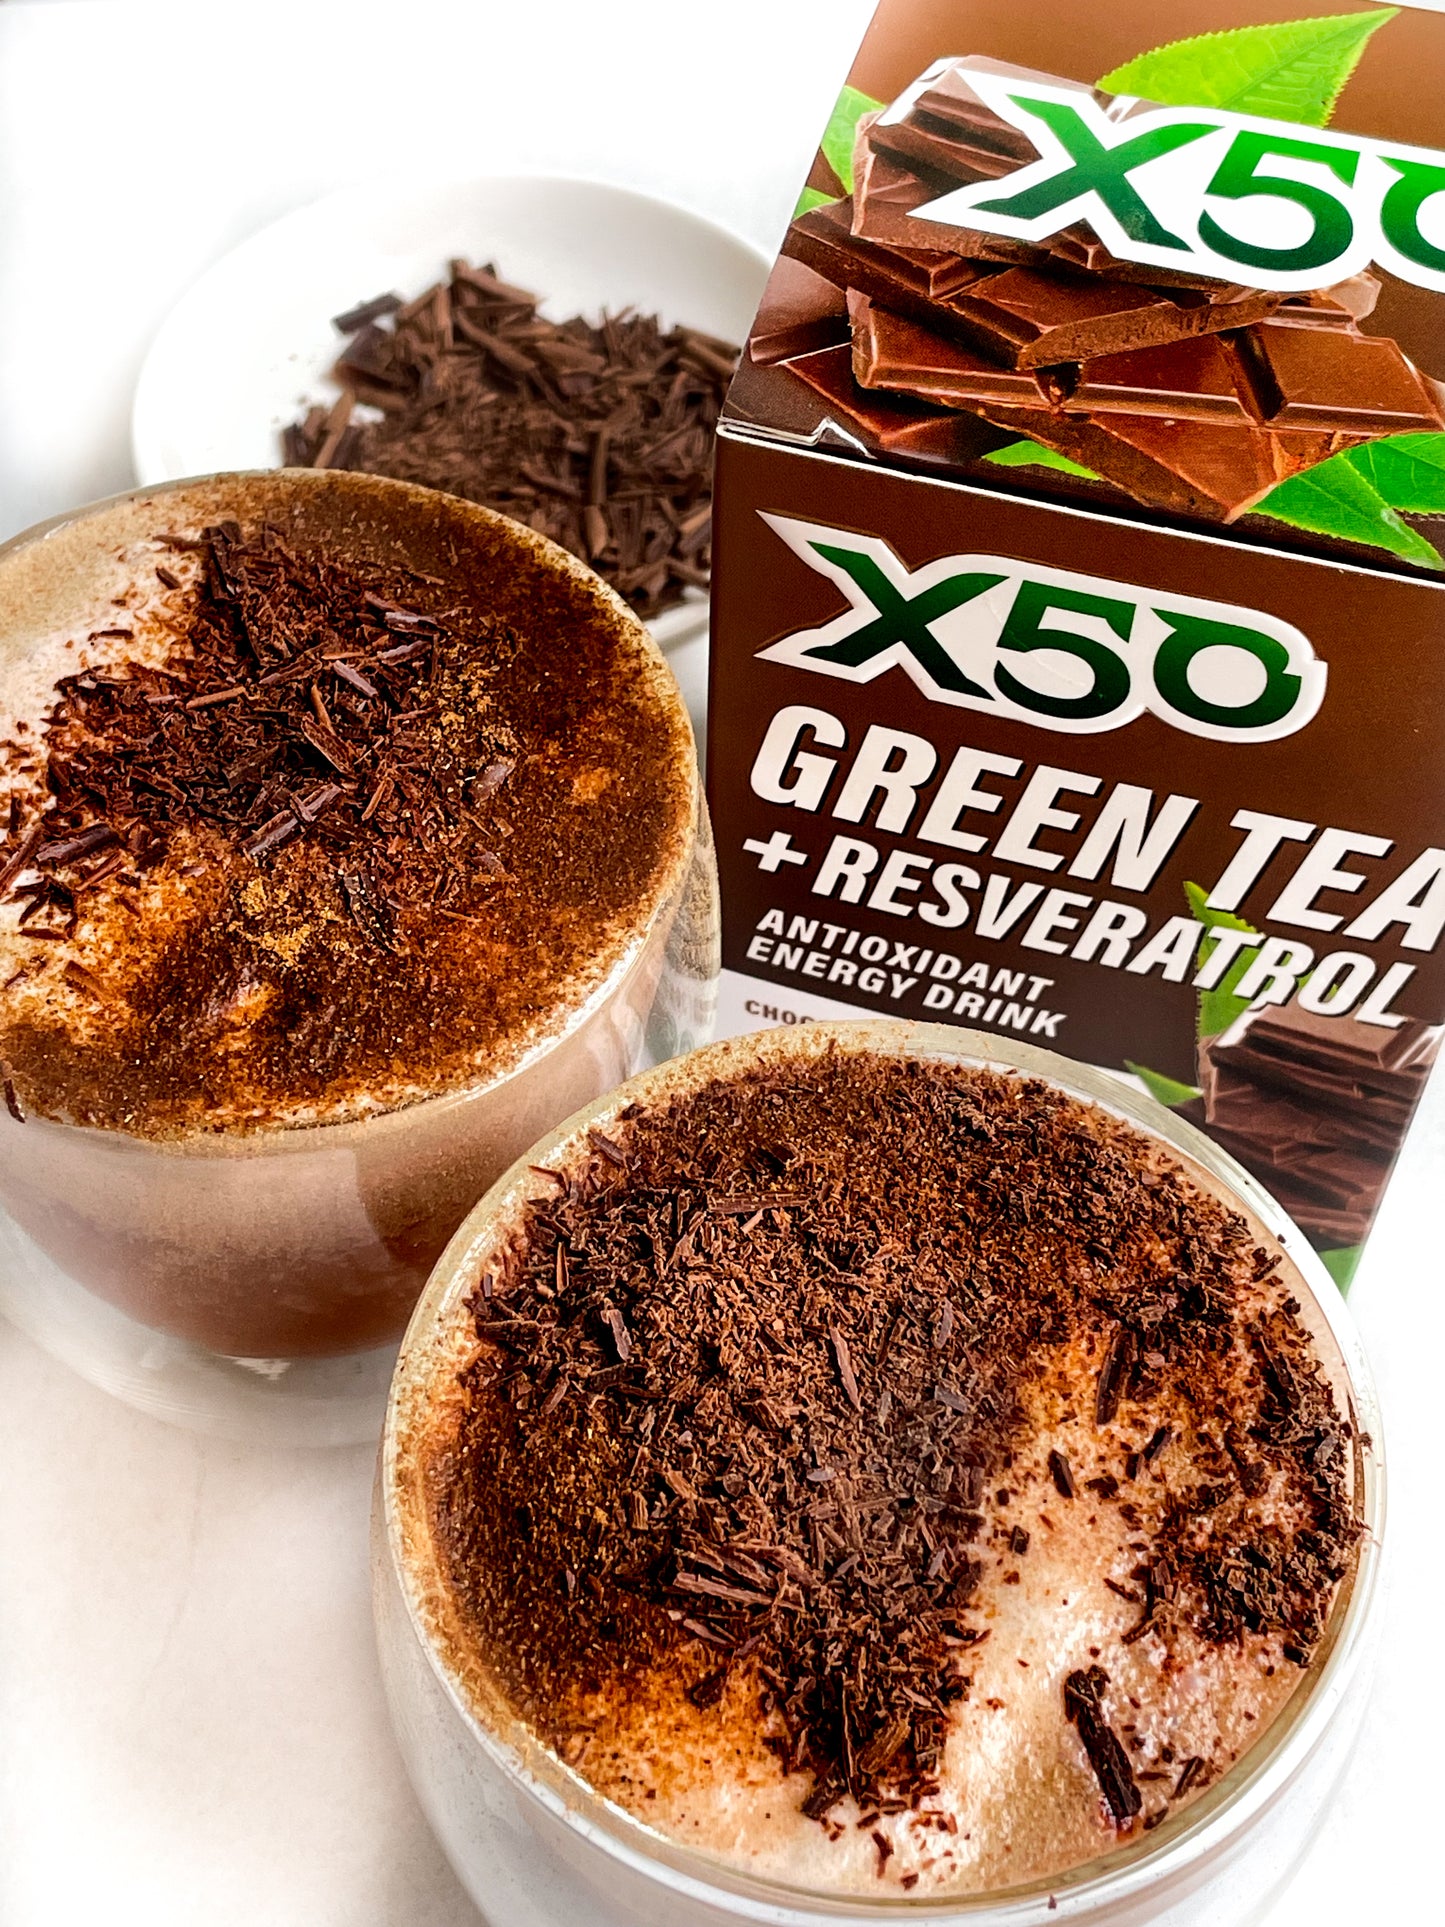 Chocolate Green Tea X50